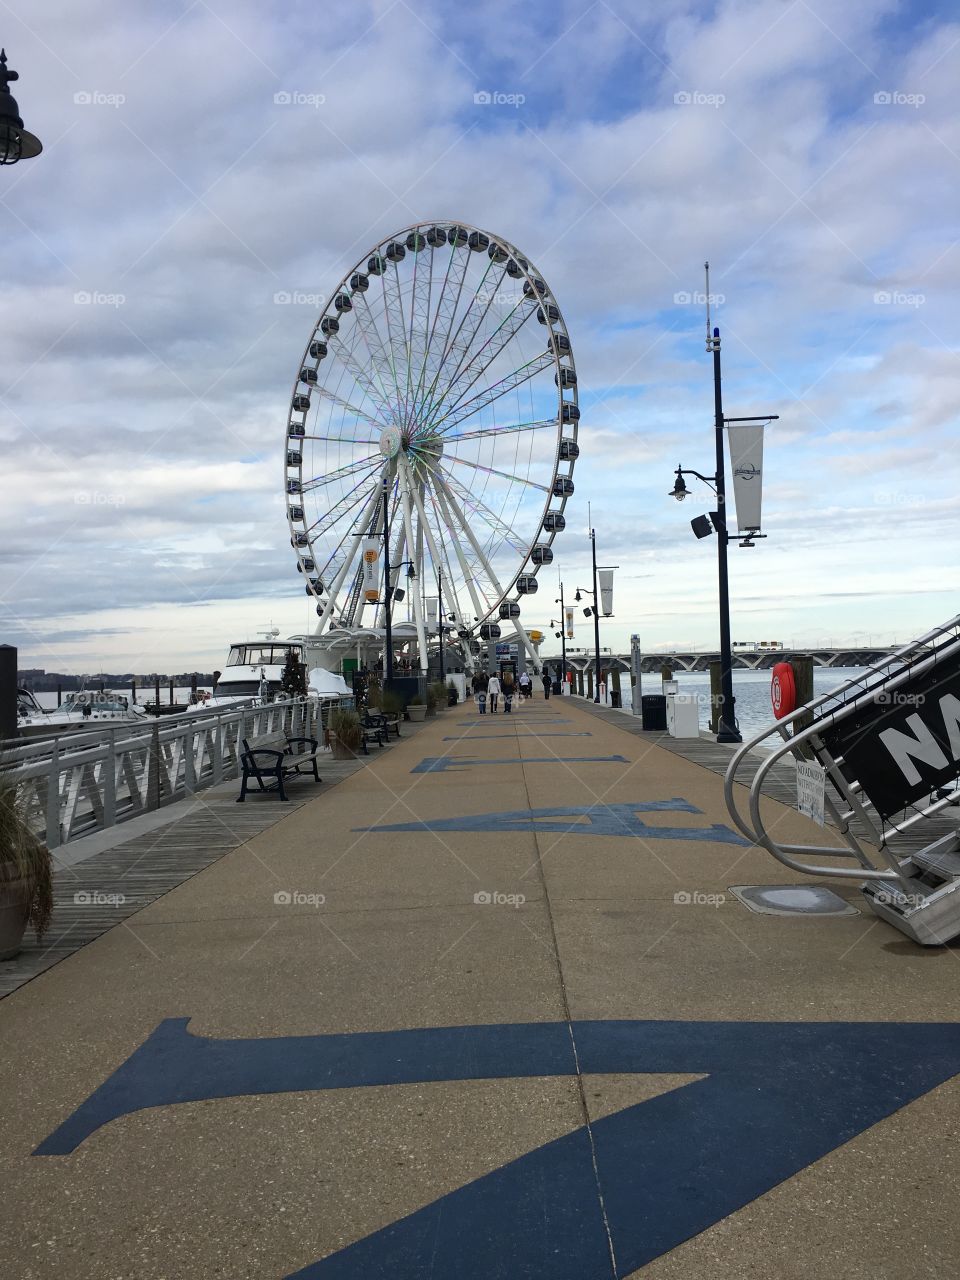 Ferris wheel at pier